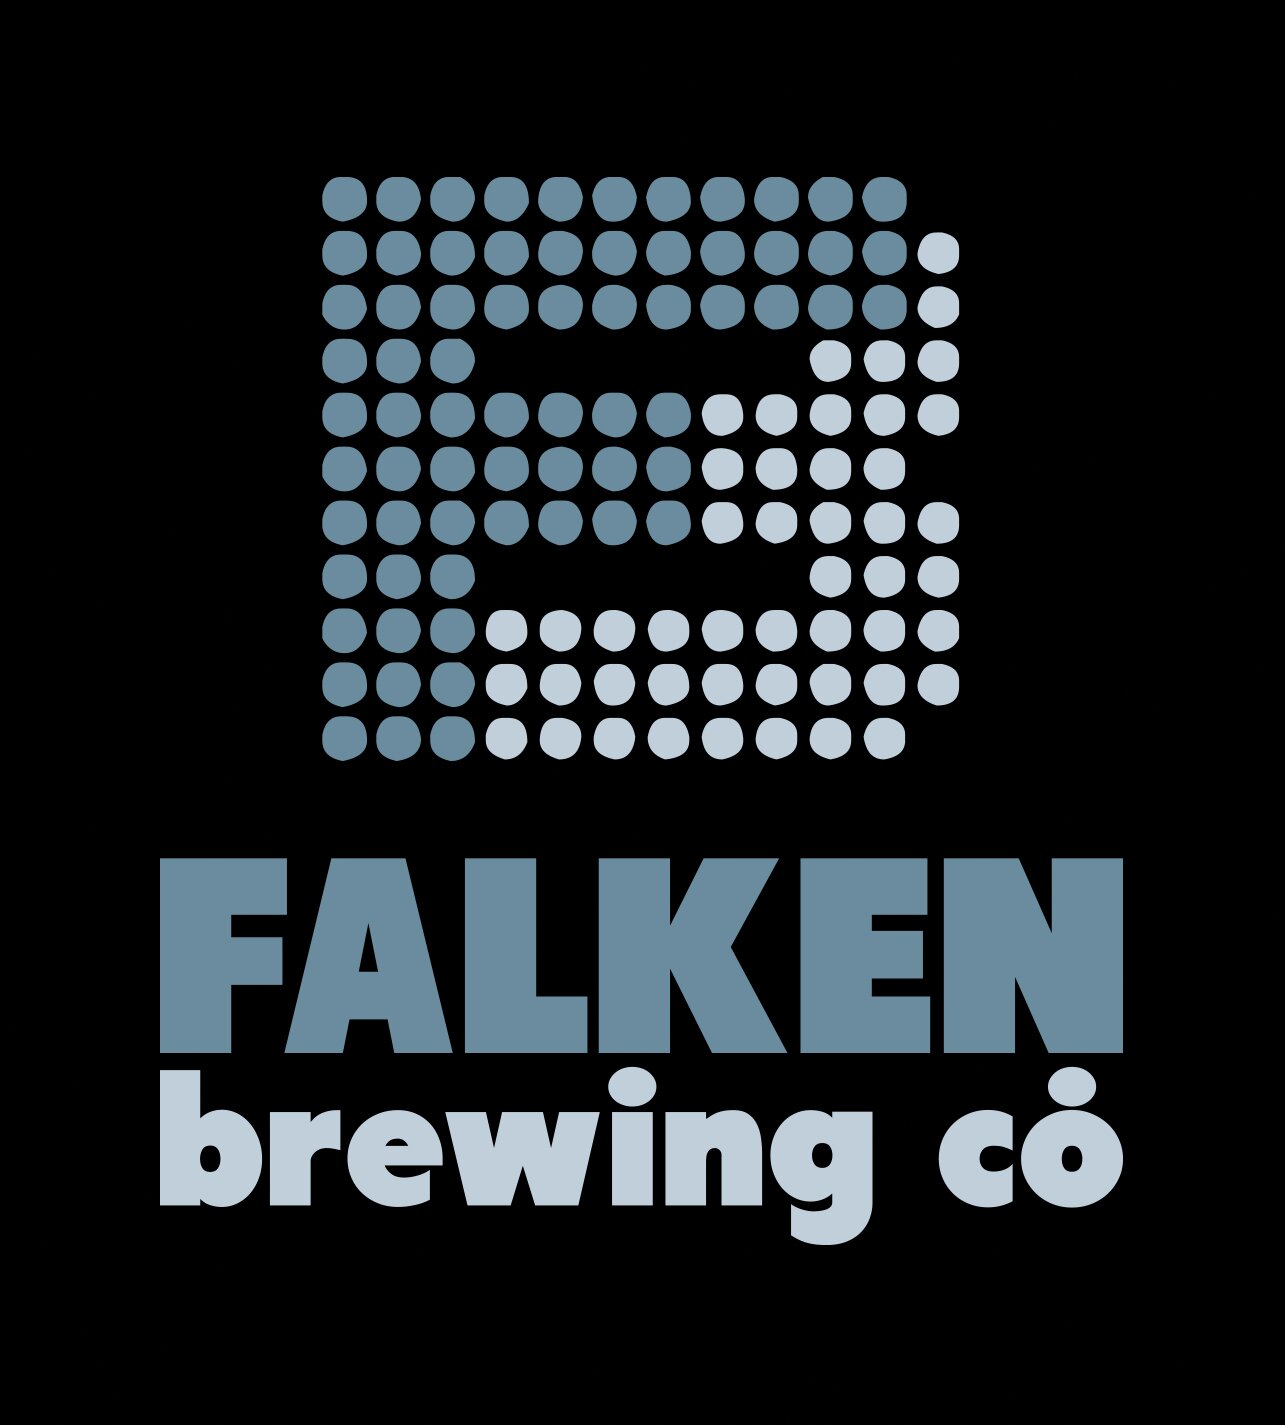 Falken Brewing